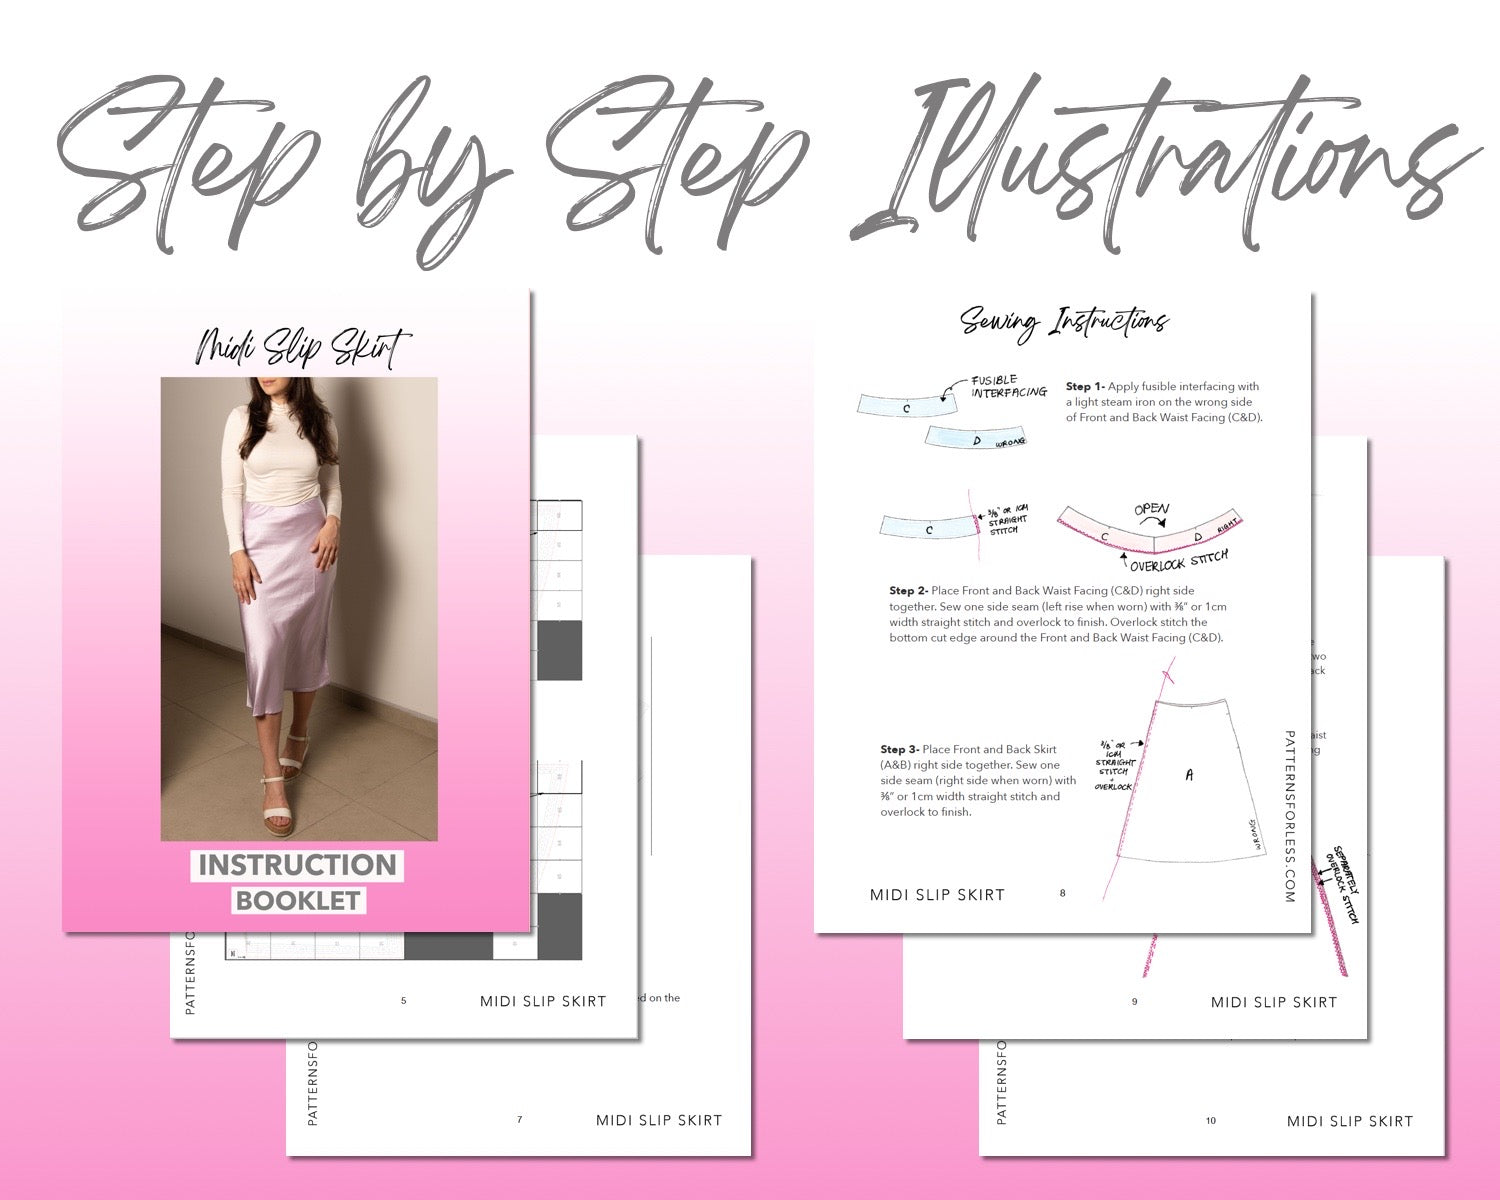 Midi Slip Skirt sewing pattern step by step illustrations.